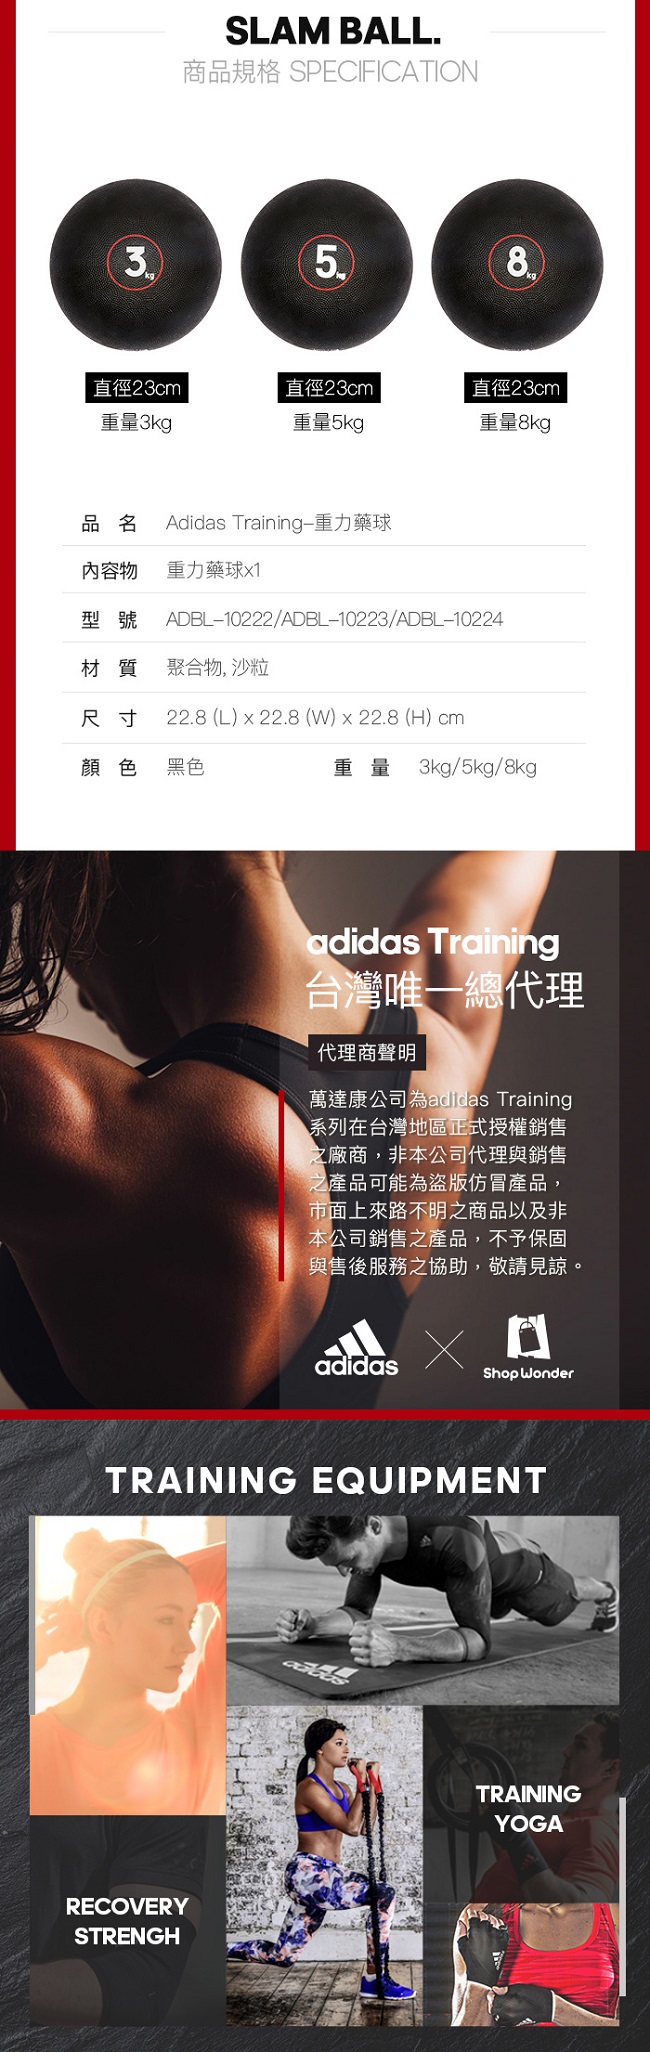 Adidas Training 重力藥球(5kg)